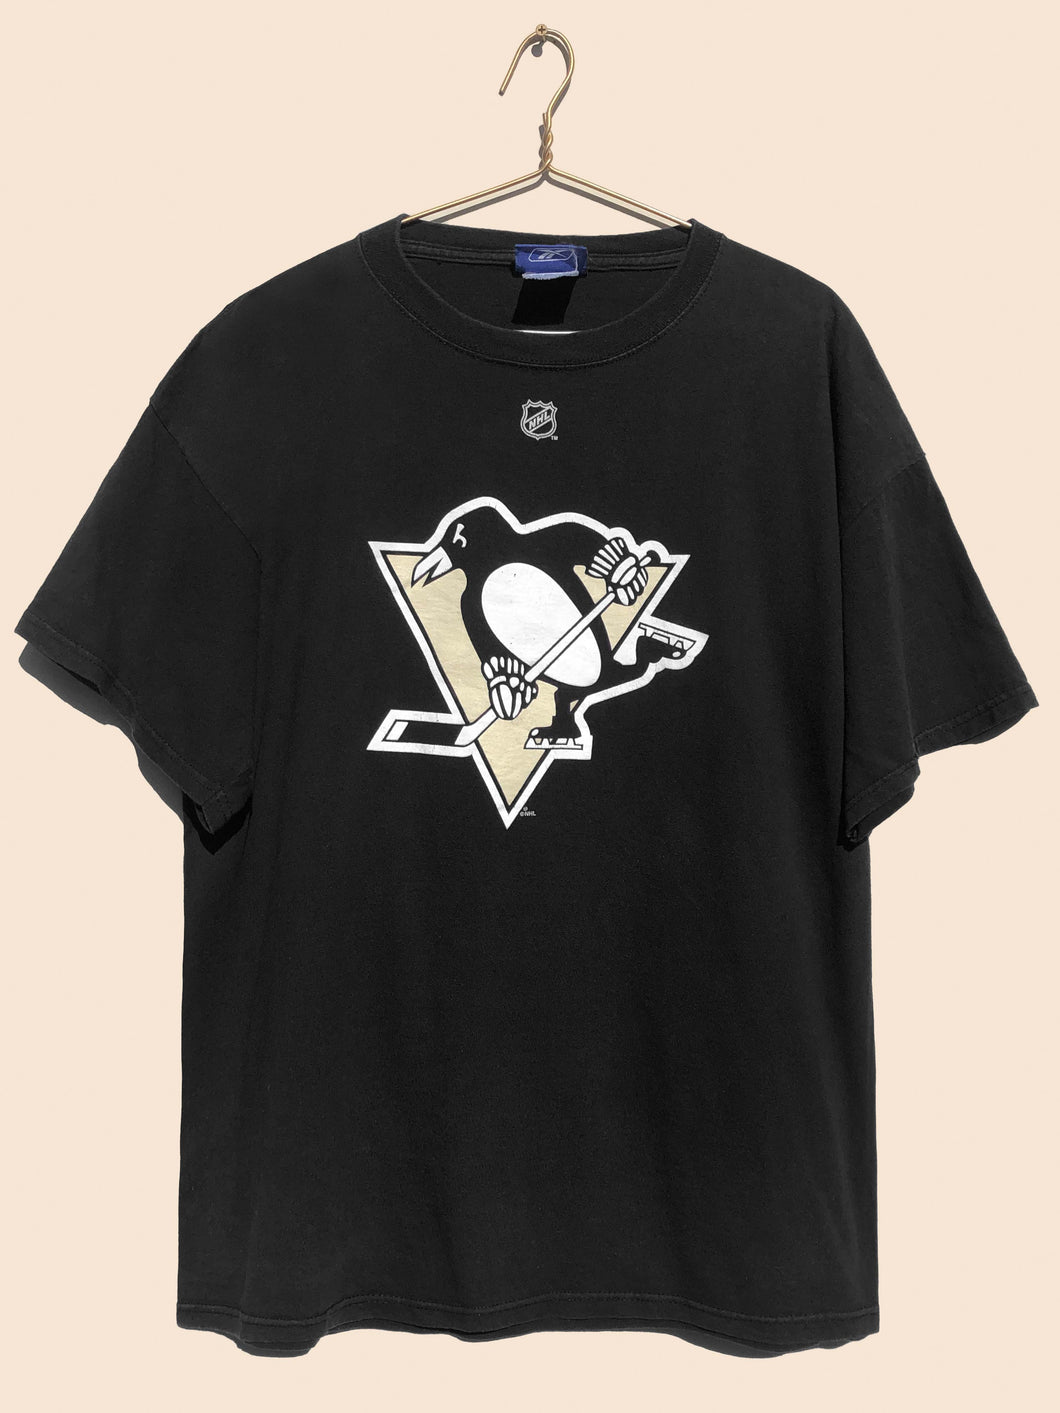 NHL Pittsburgh Penguins Sidney Crosby 87 T-Shirt Black (L)